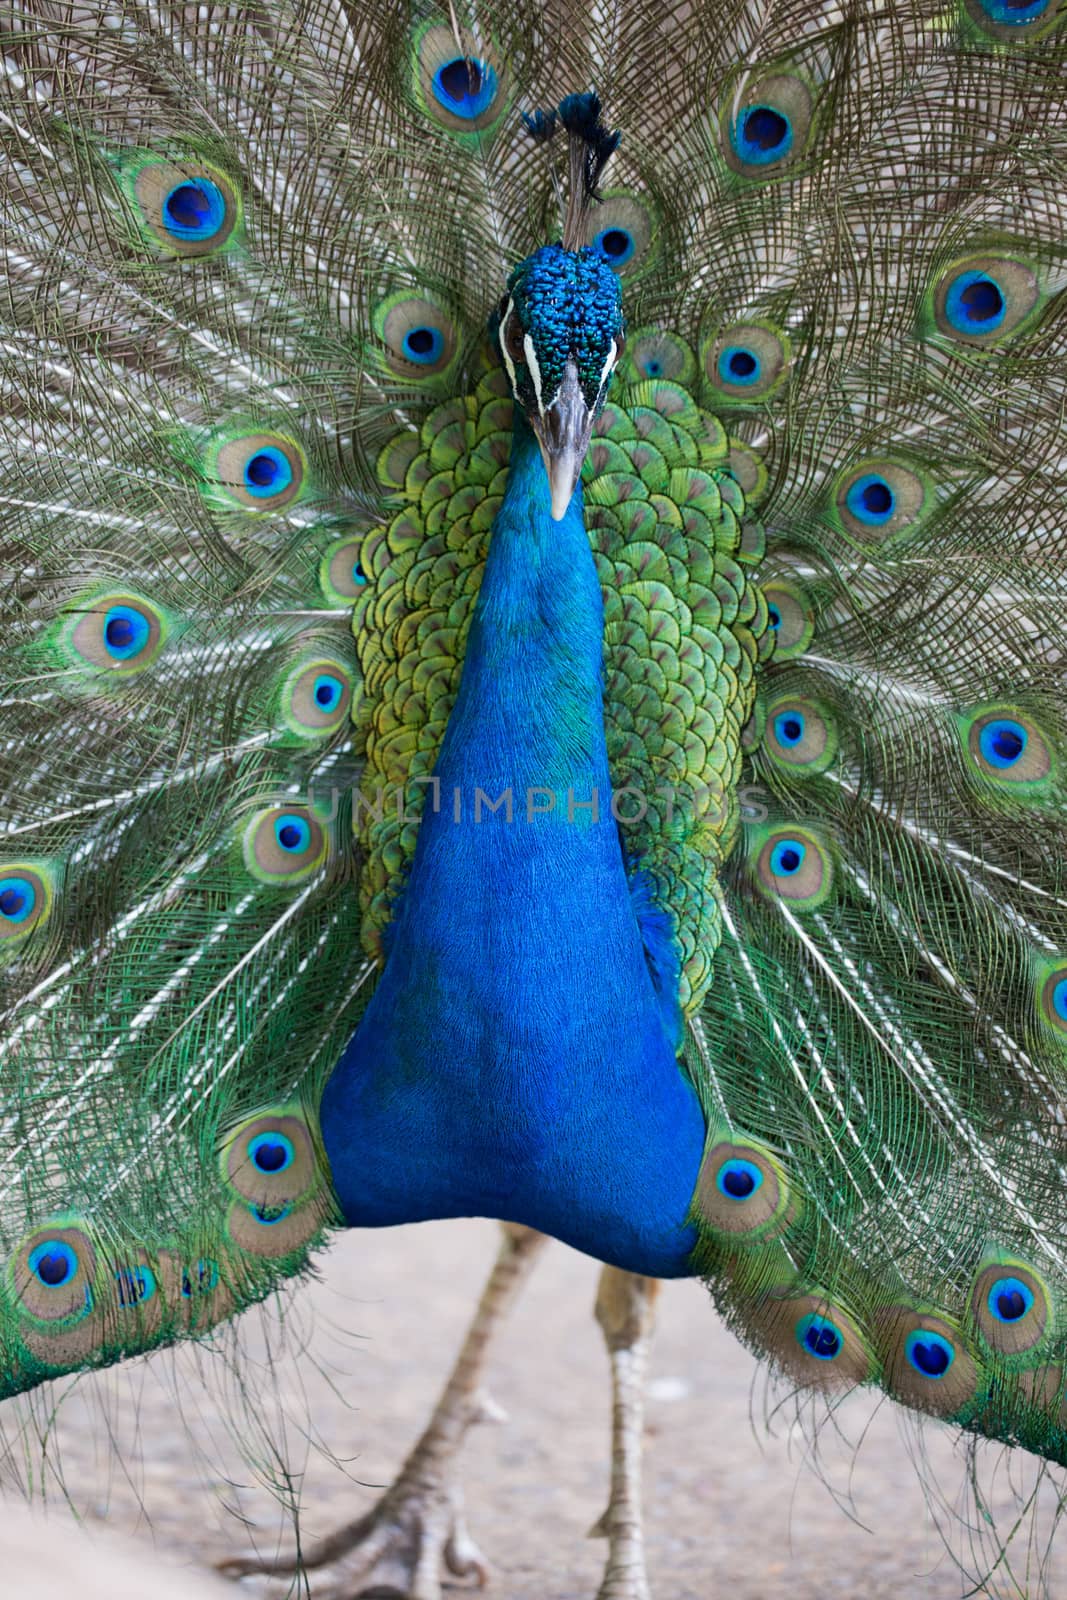 Preening peacock taken in Costa Rica